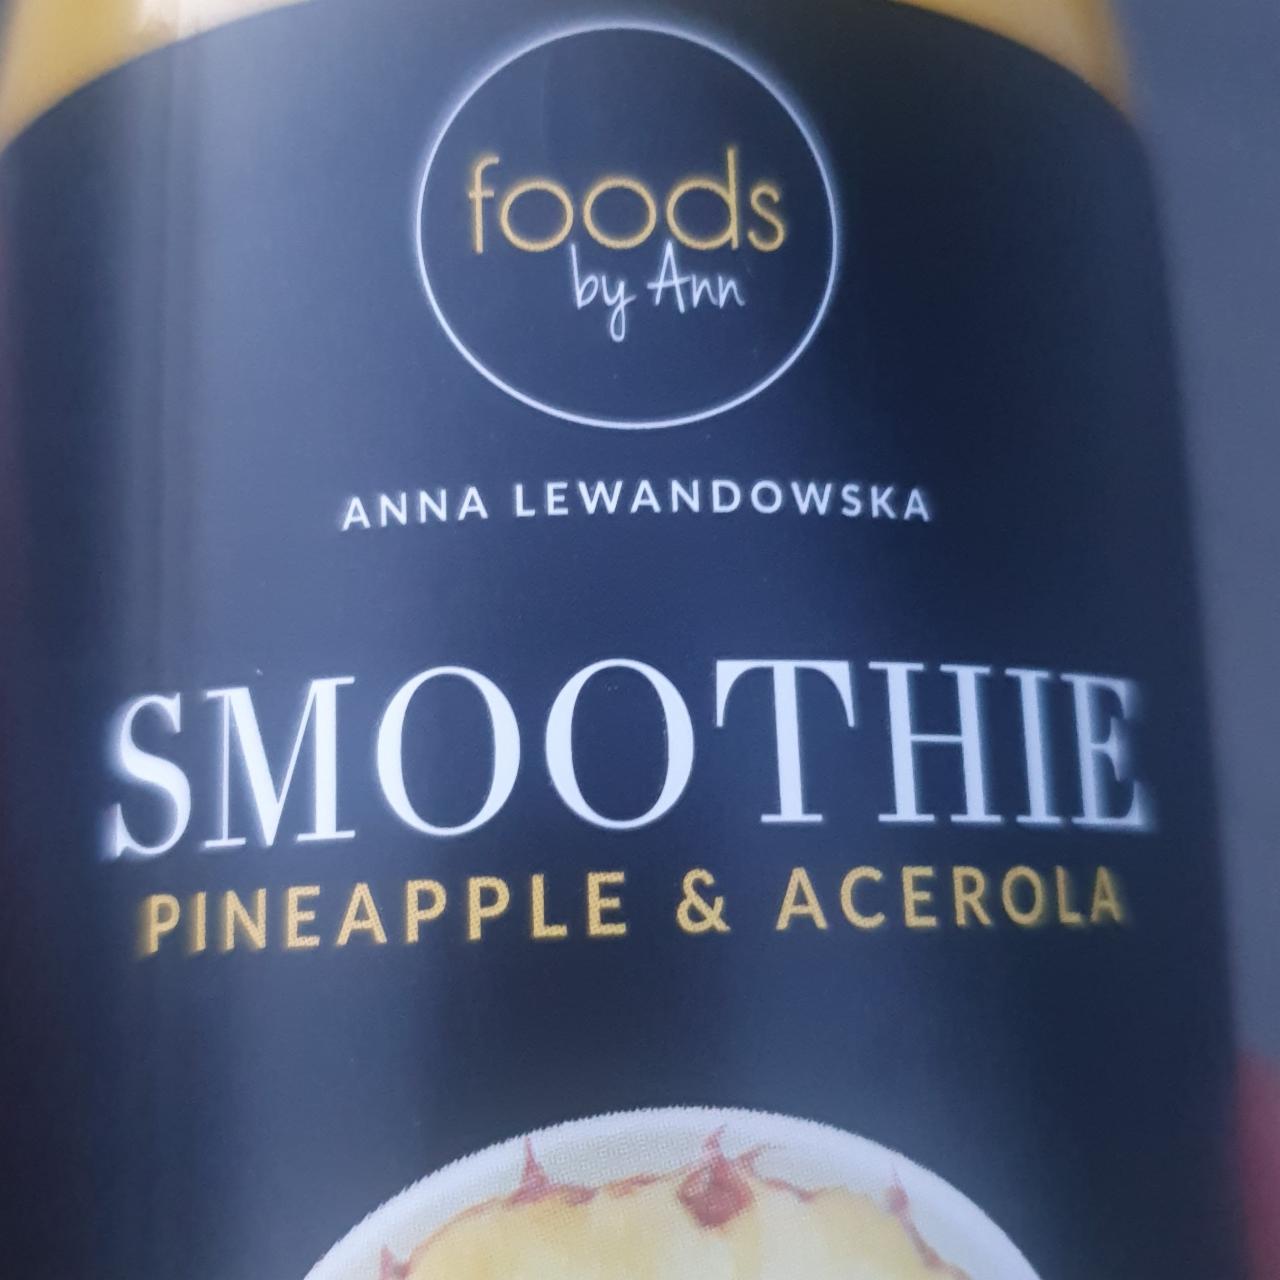 Zdjęcia - Smoothie pineapple & acerola Foods by Ann